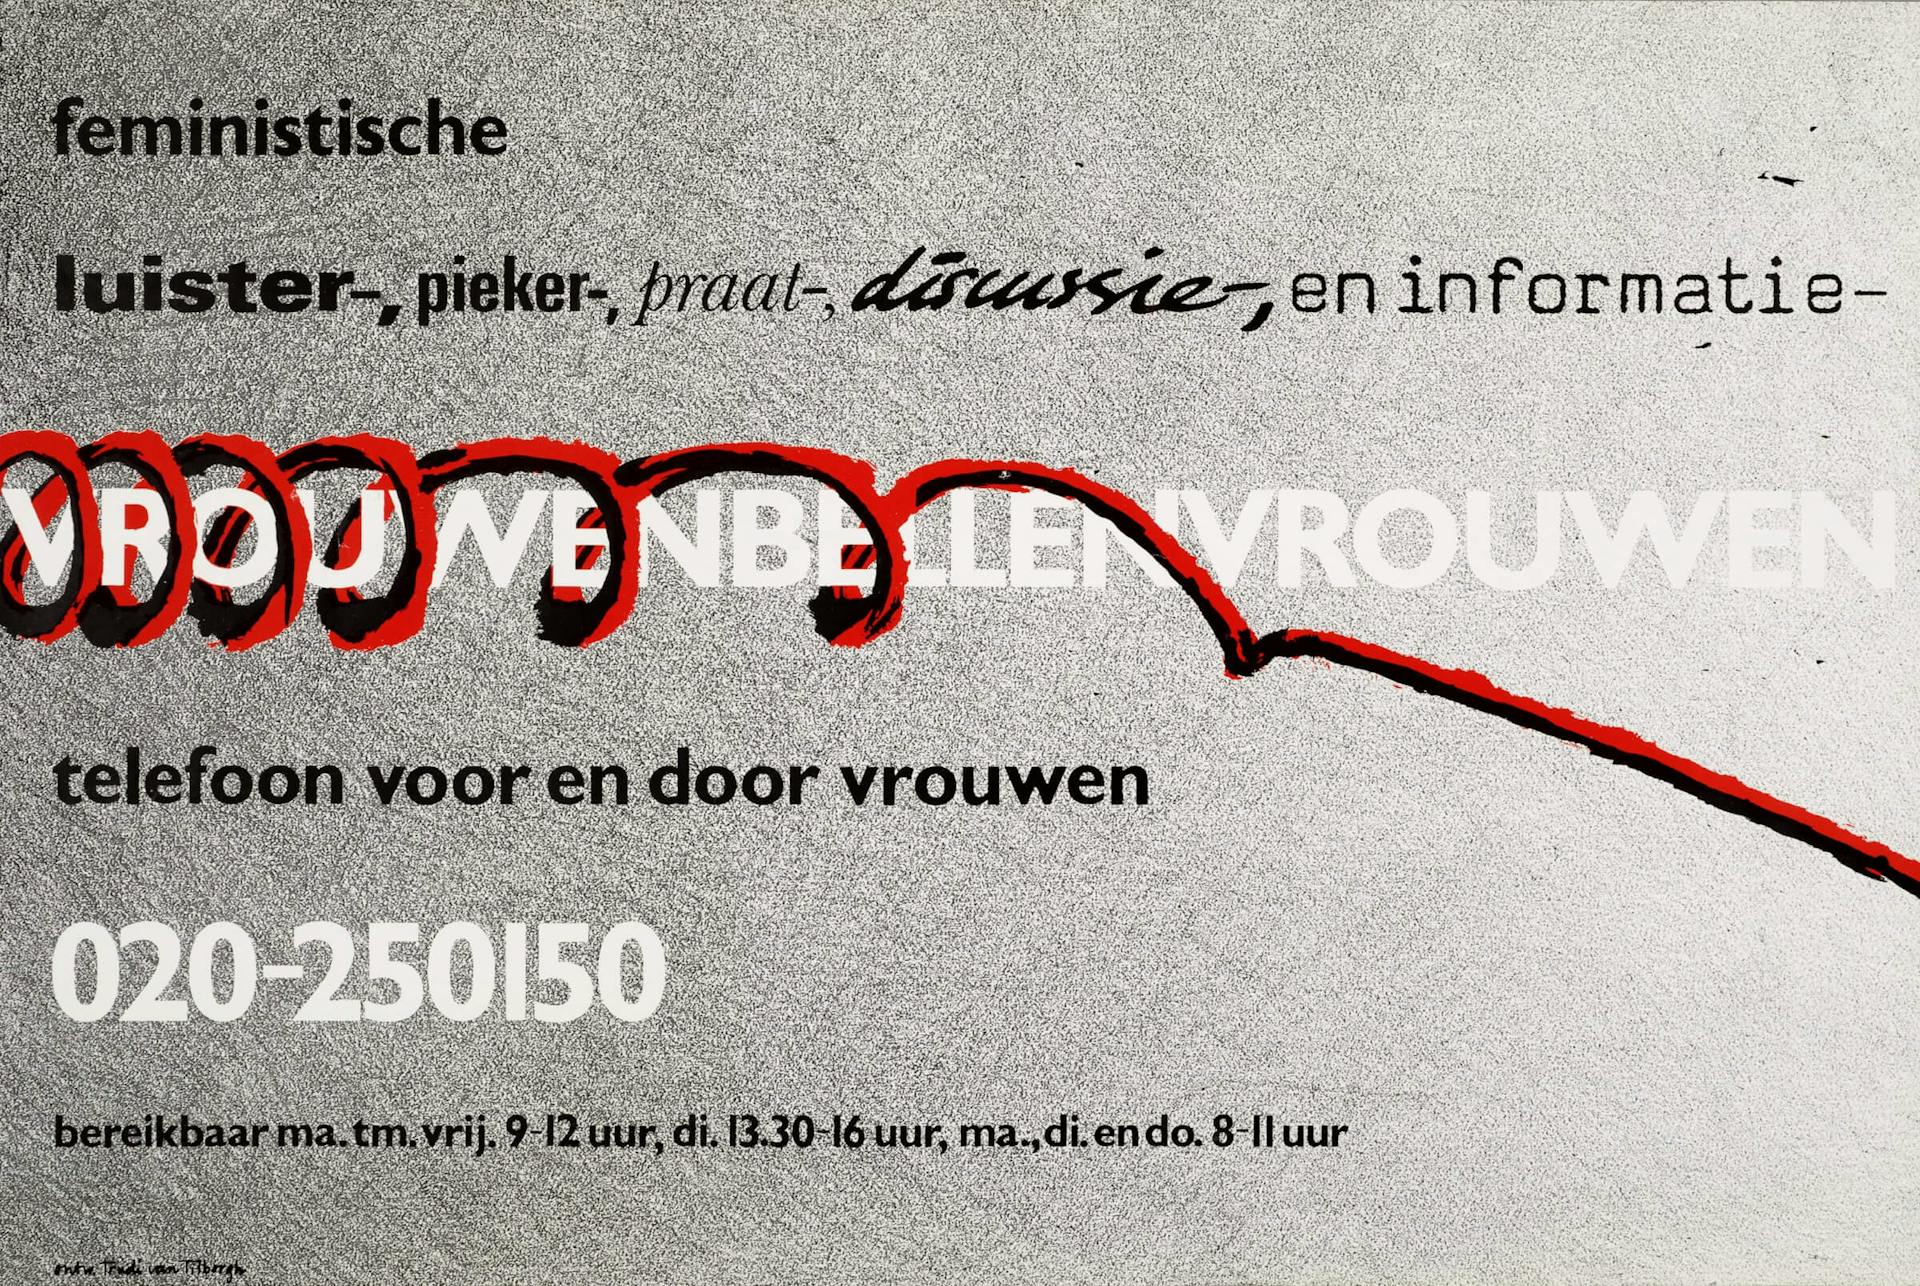 [Women Call Women 020-250150], Vrouwen Bellen Vrouwen Foundation, 197?, design: Trudi van Tilborgh. Source: Collection IAV-Atria  